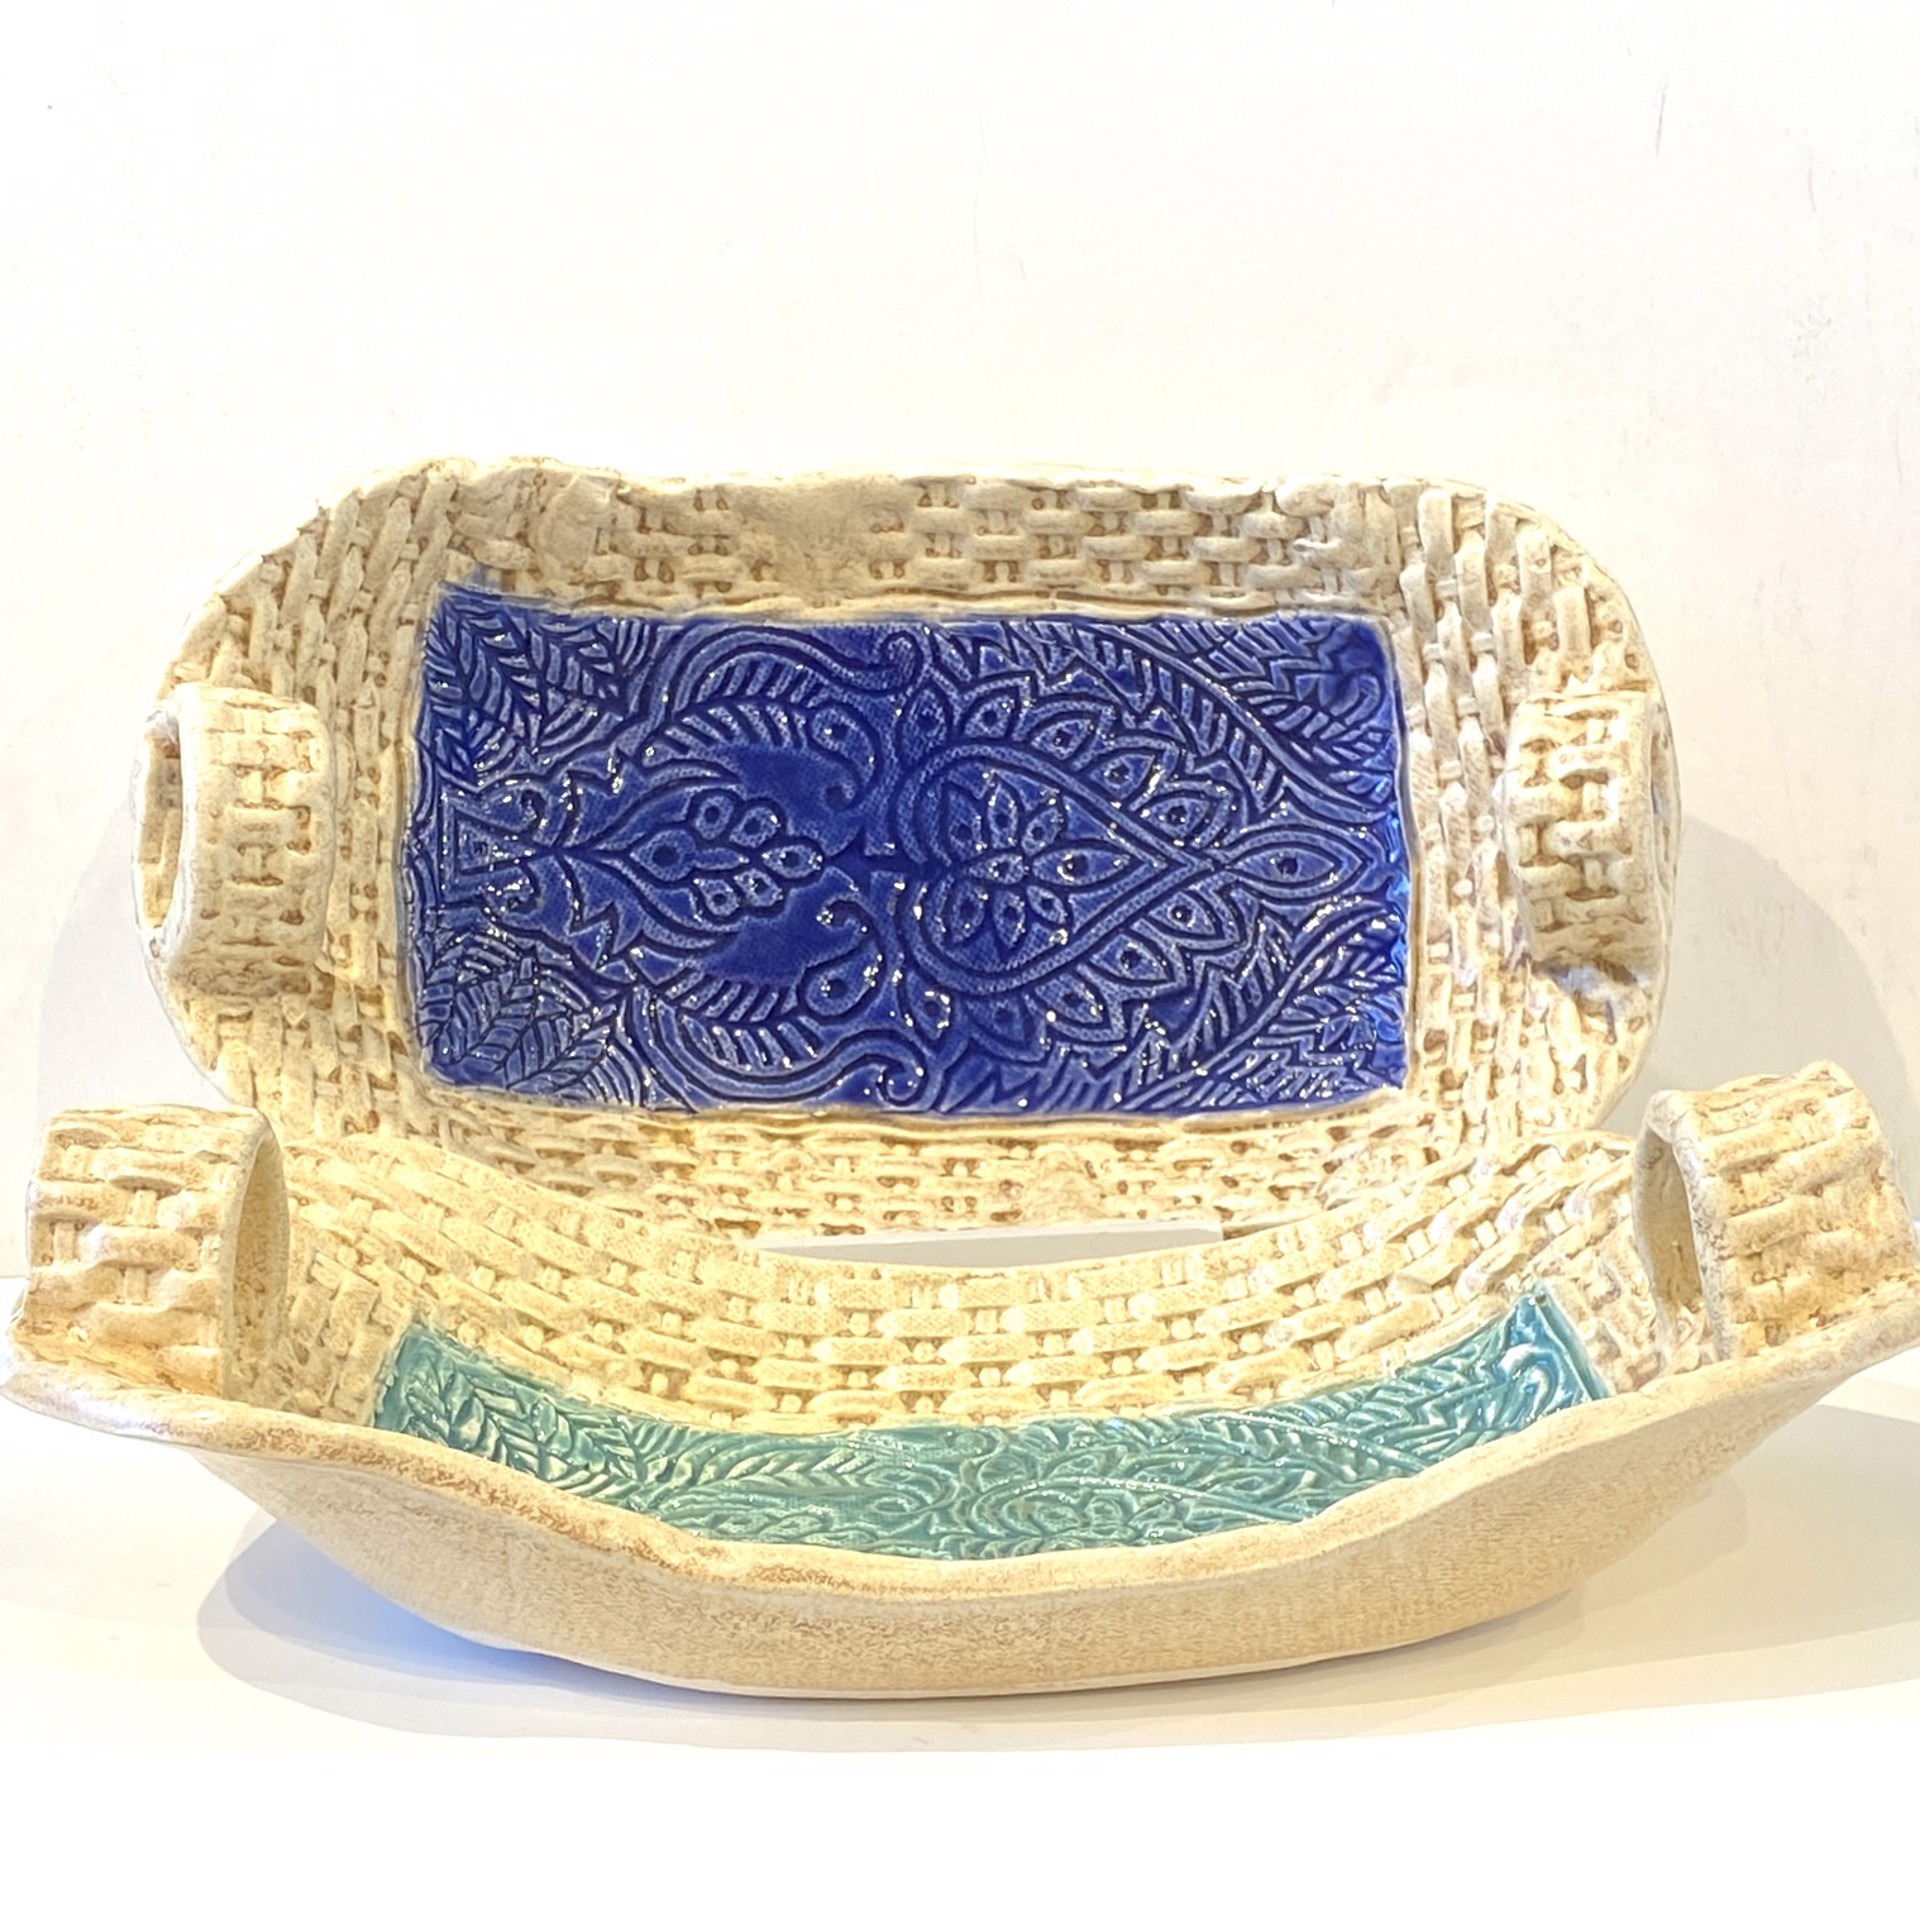 Bread “Basket” Bowl with Handles, Various by Ilene Olanoff